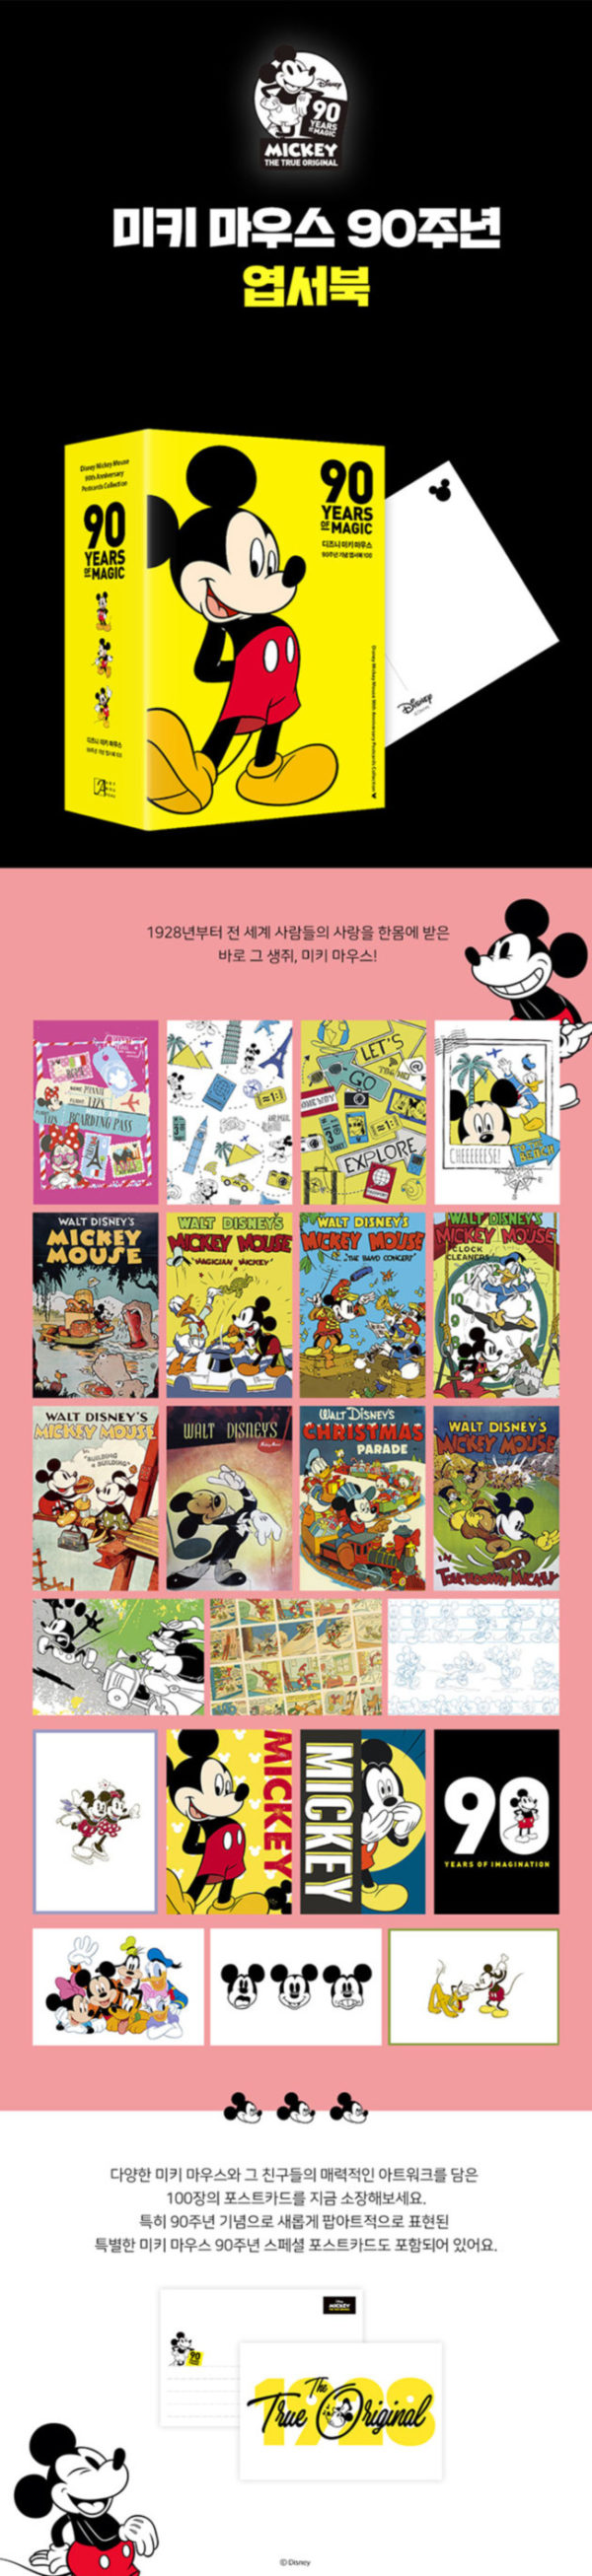 Artnouveau ディズニー ミッキーマウス 90周年記念ポストカード集 100枚1セット 韓国商品の輸入代行法人会社